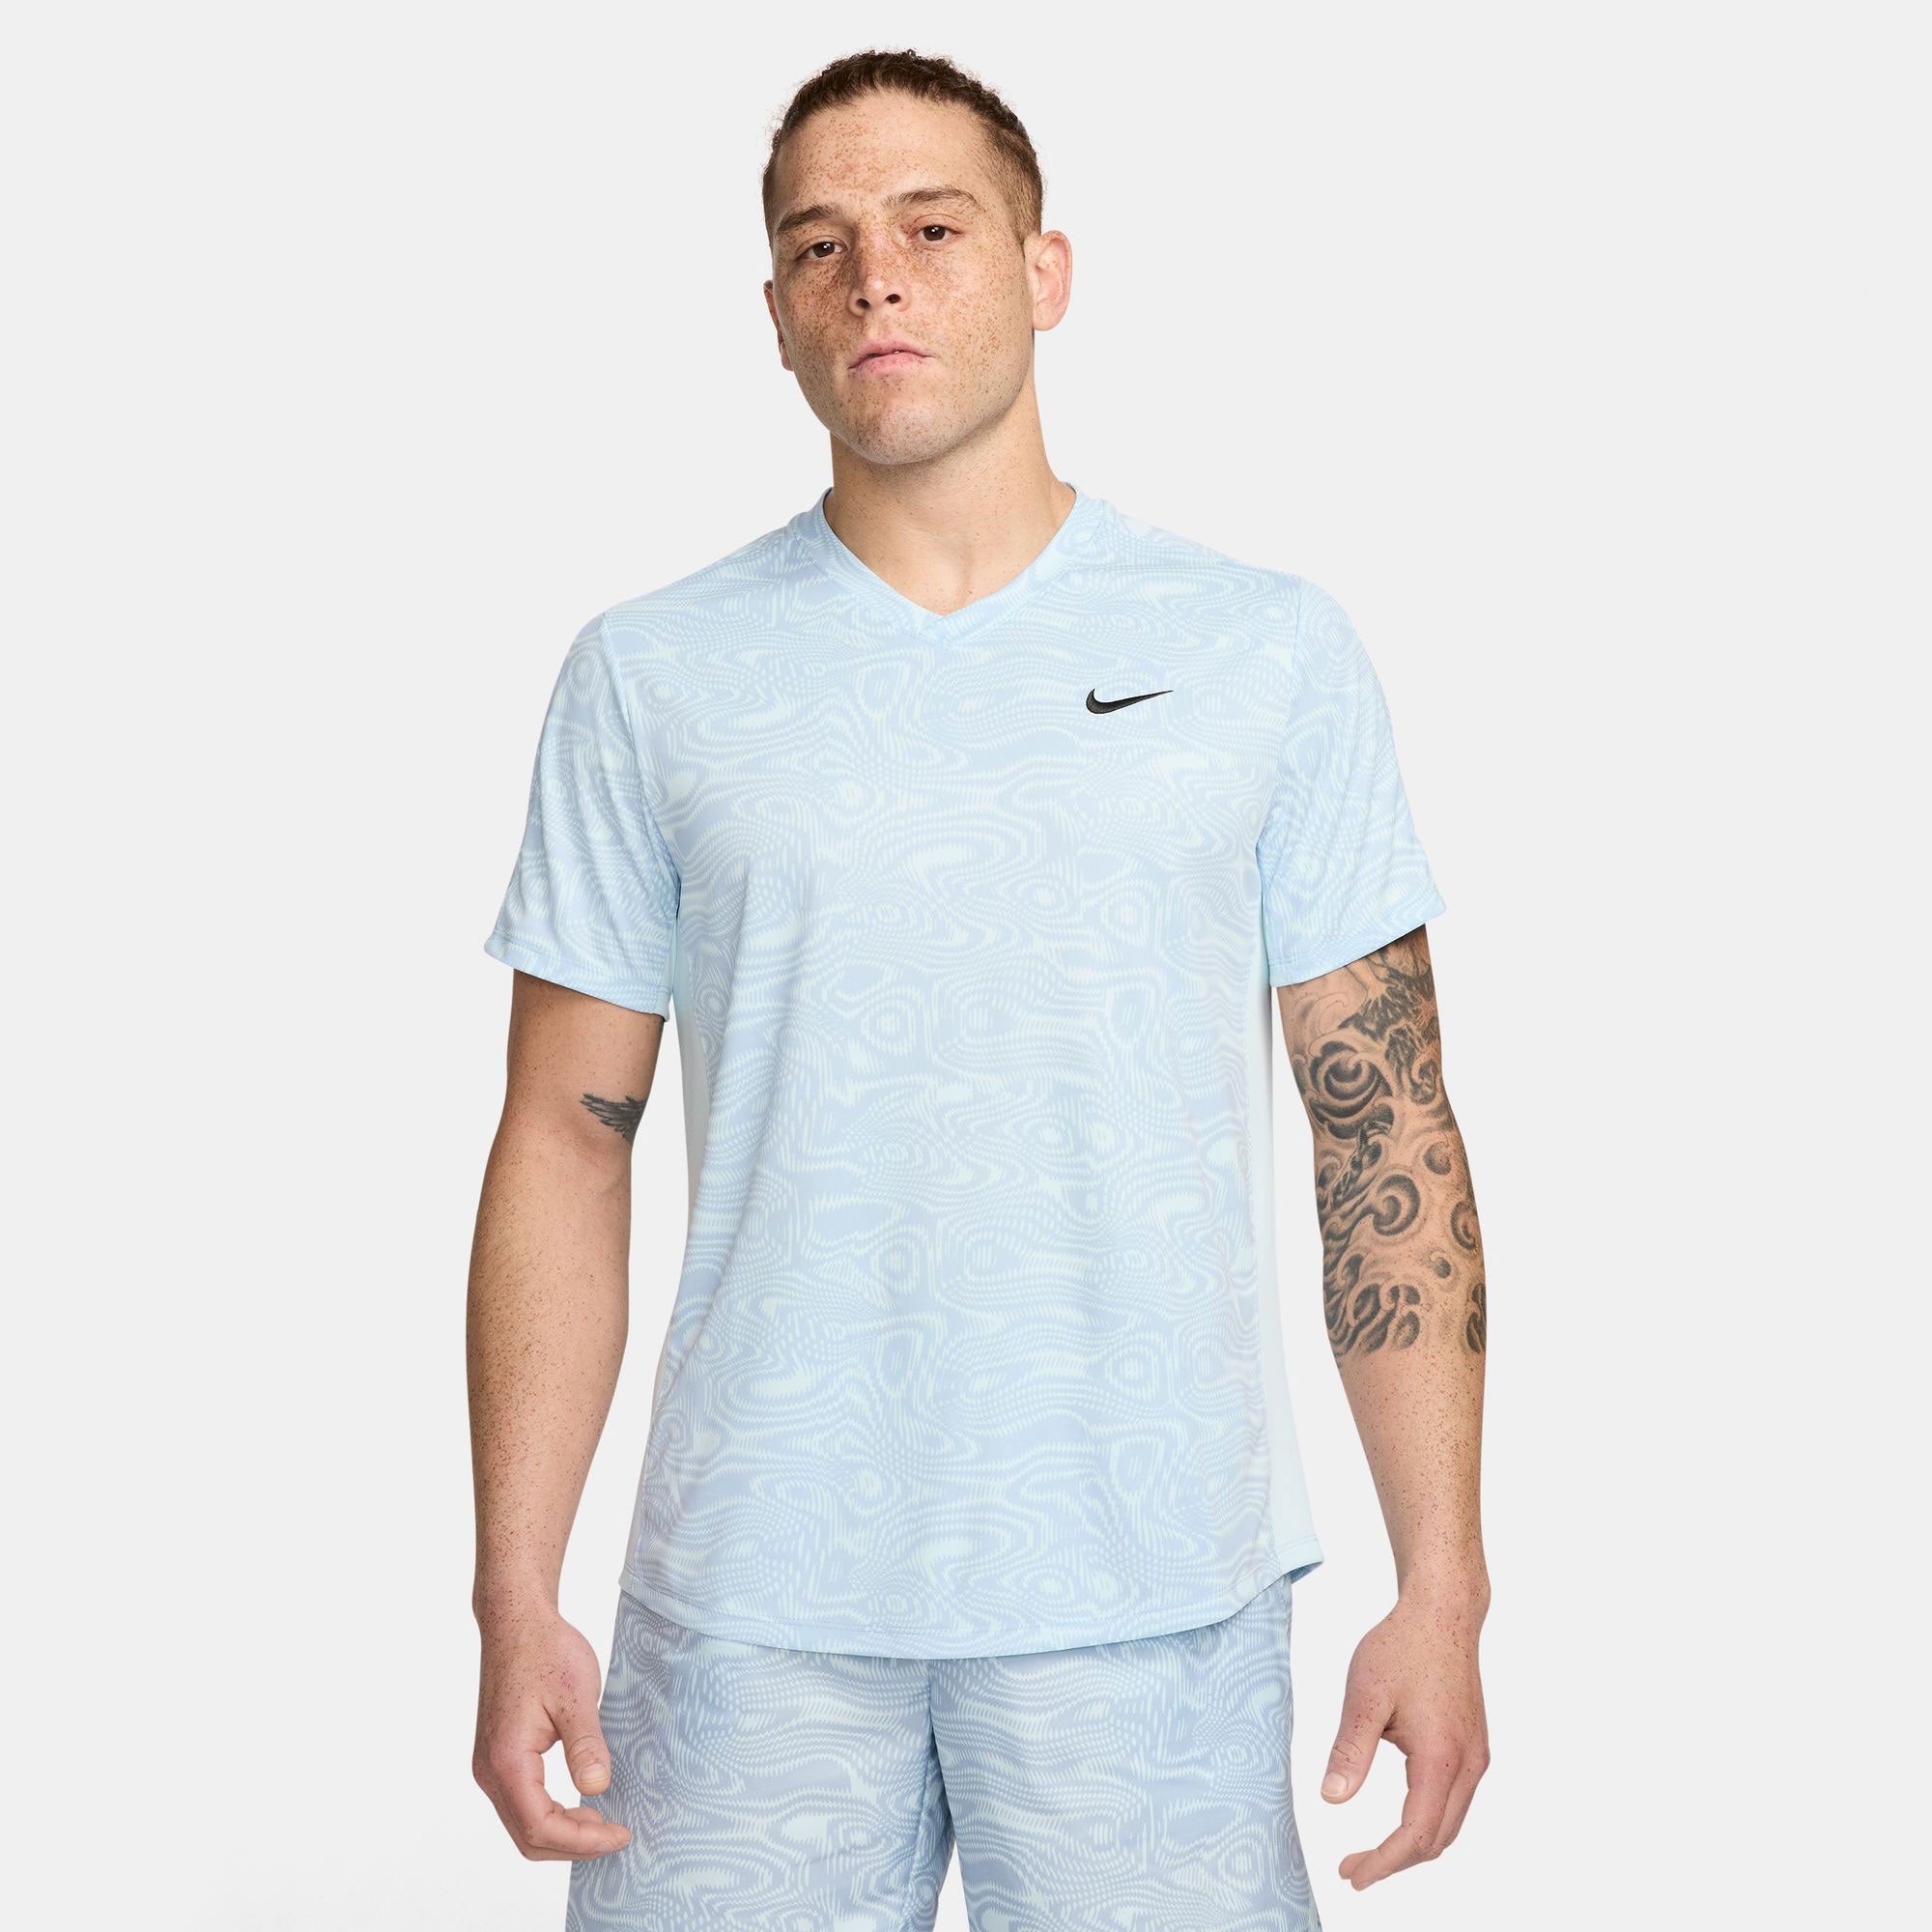 NikeCourt Victory Men's Dri-FIT Printed Tennis Shirt - Blue (1)